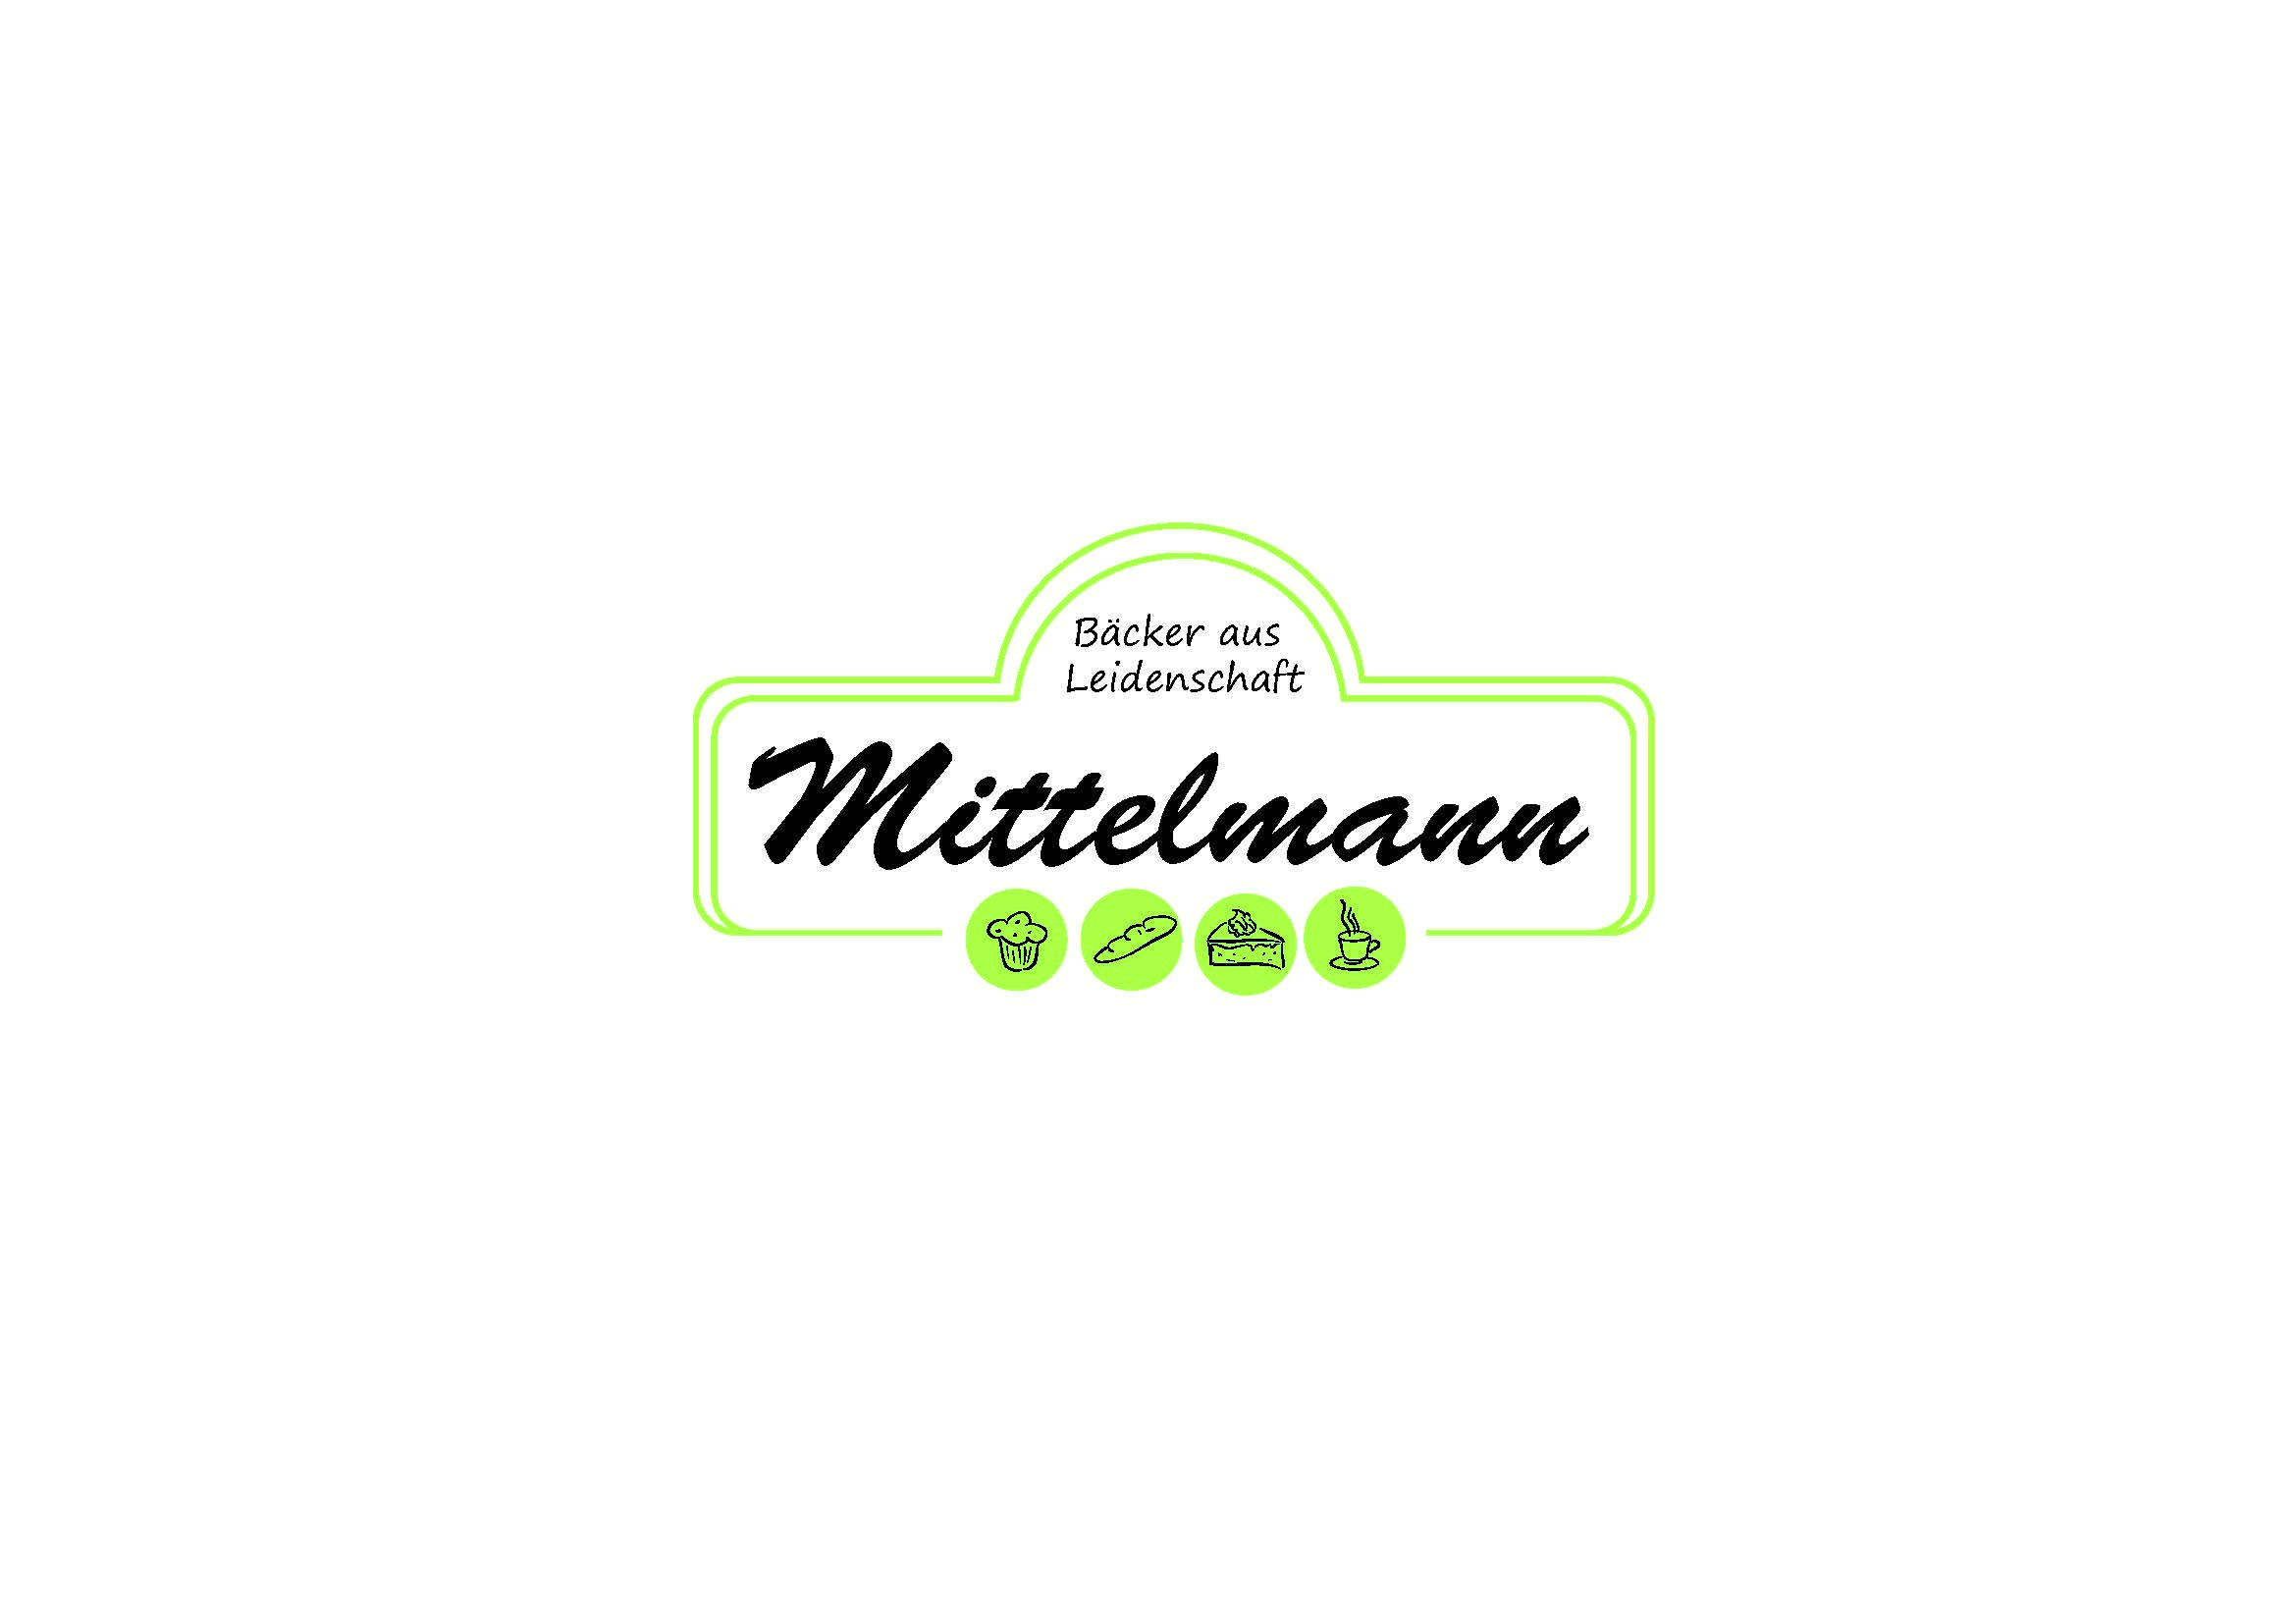 Mittelmann